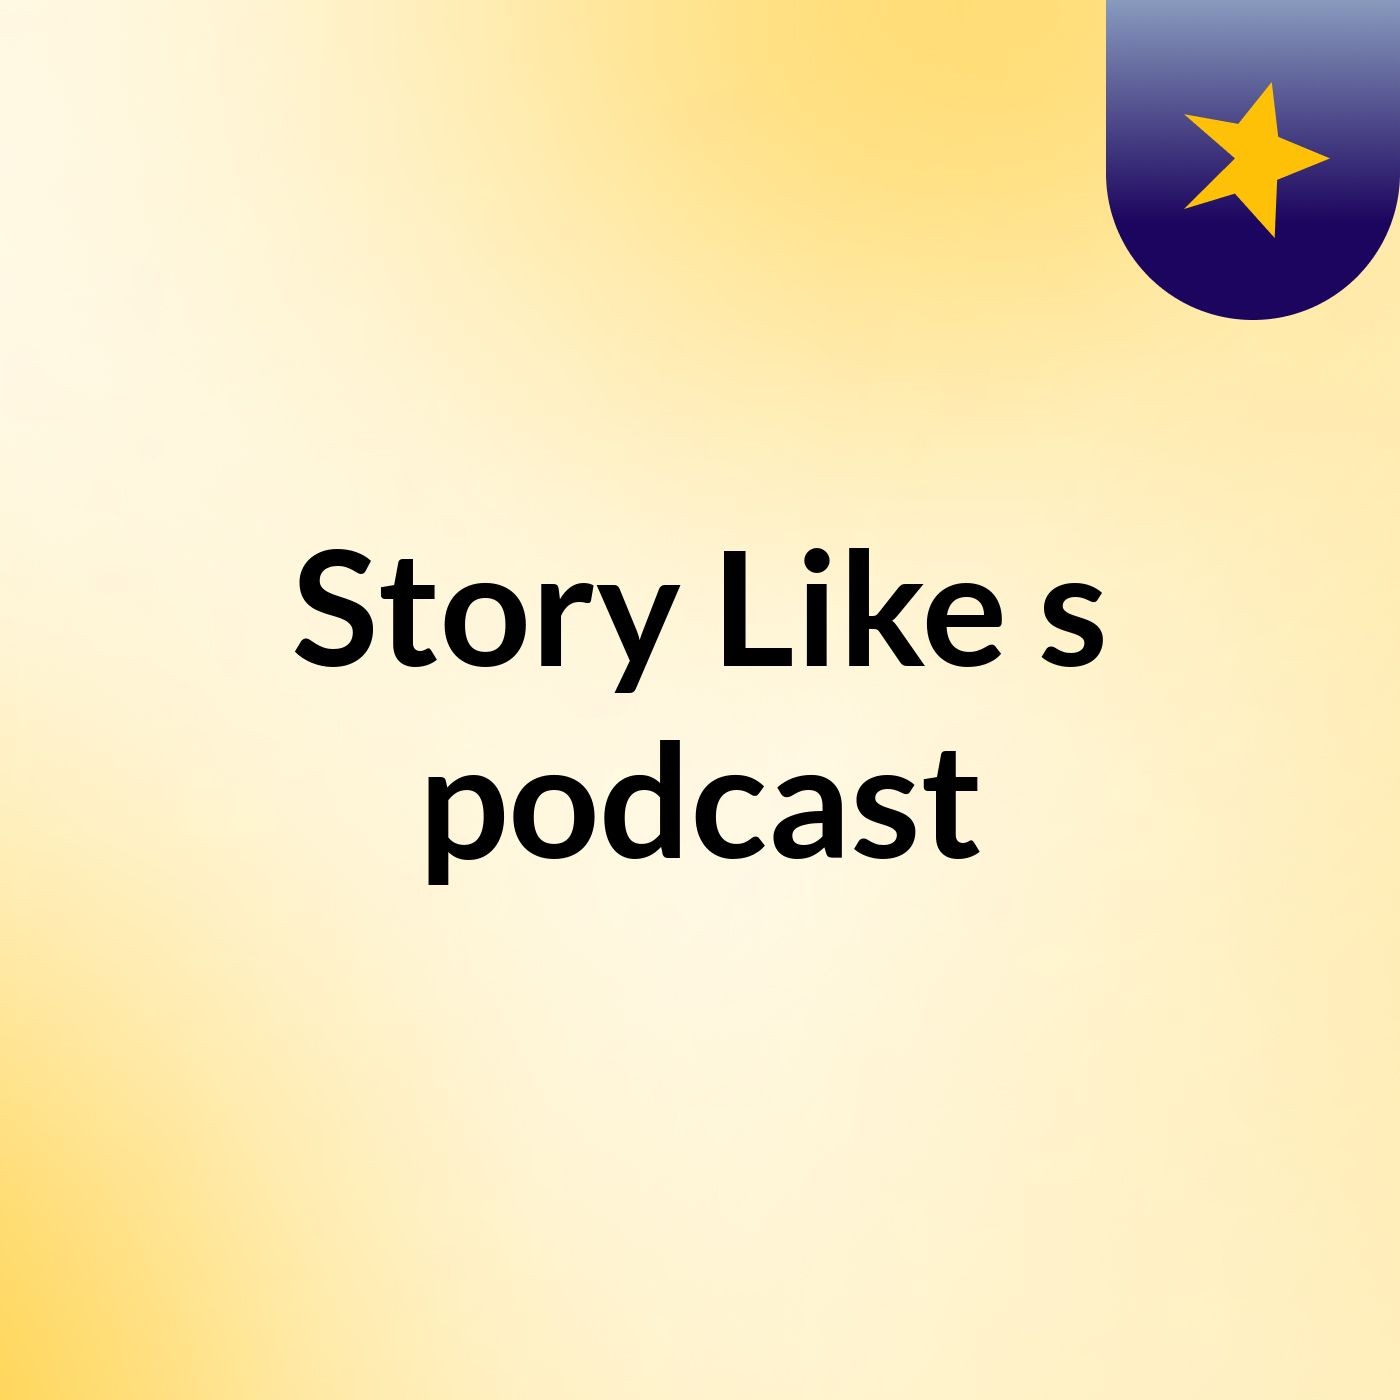 Episode 4 - Story Like's podcast